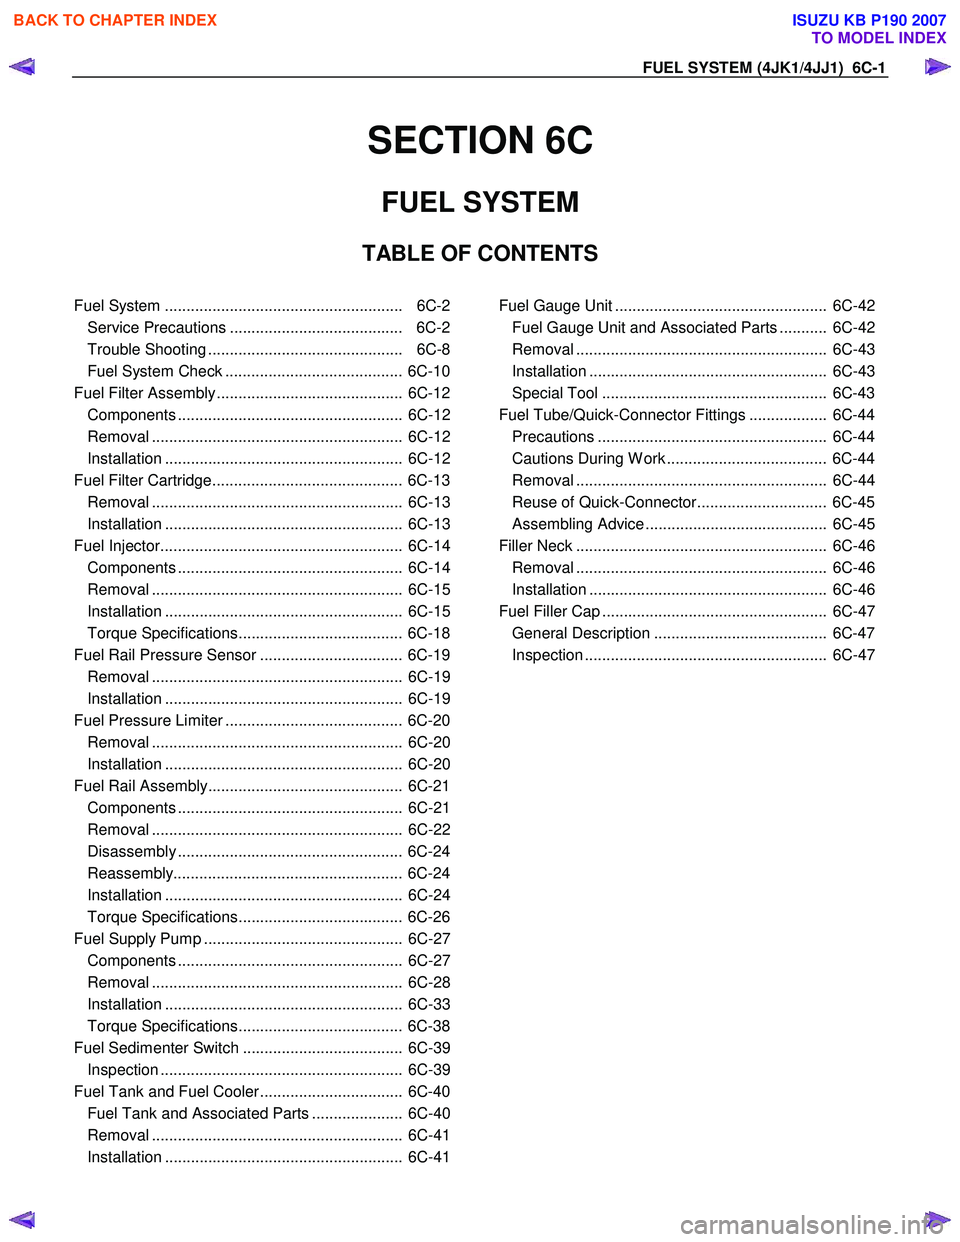 ISUZU KB P190 2007  Workshop Repair Manual FUEL SYSTEM (4JK1/4JJ1)  6C-1 
SECTION 6C 
FUEL SYSTEM  
TABLE OF CONTENTS  
 
Fuel System .......................................................  6C-2 Service Precautions ...........................